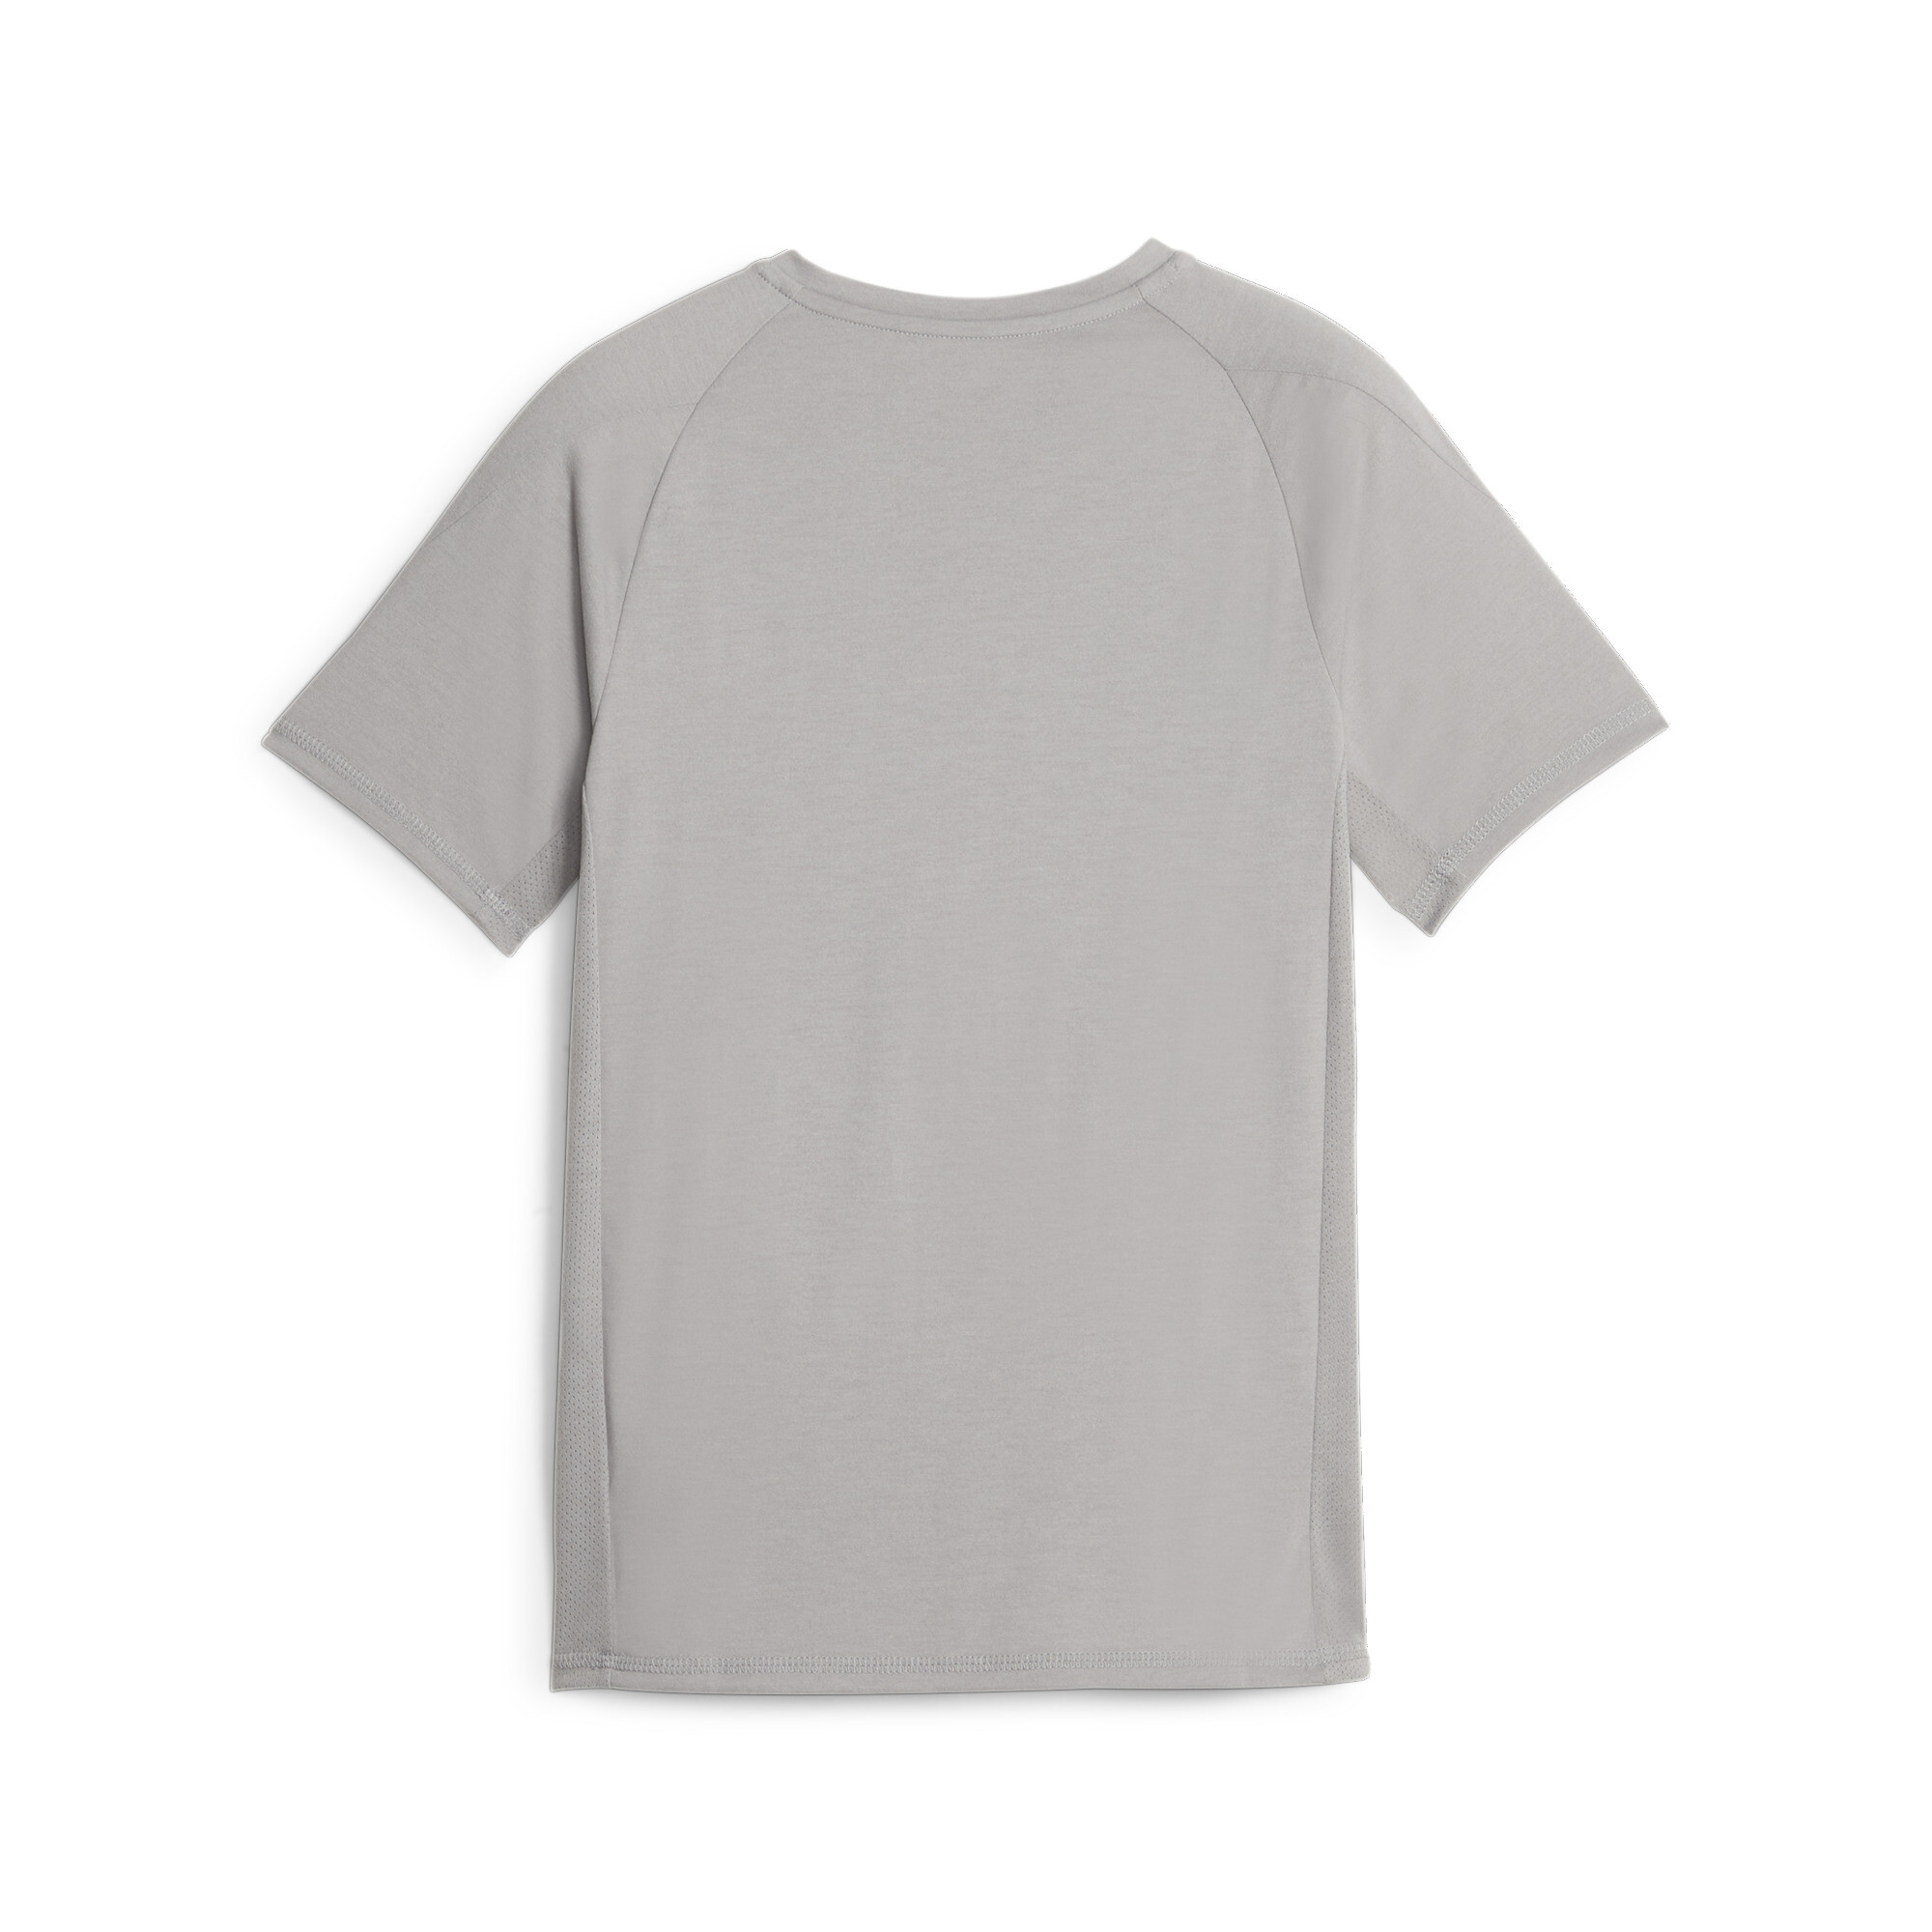 PUMA Evostripe T-Shirt In Gray, Size 13-14 Youth